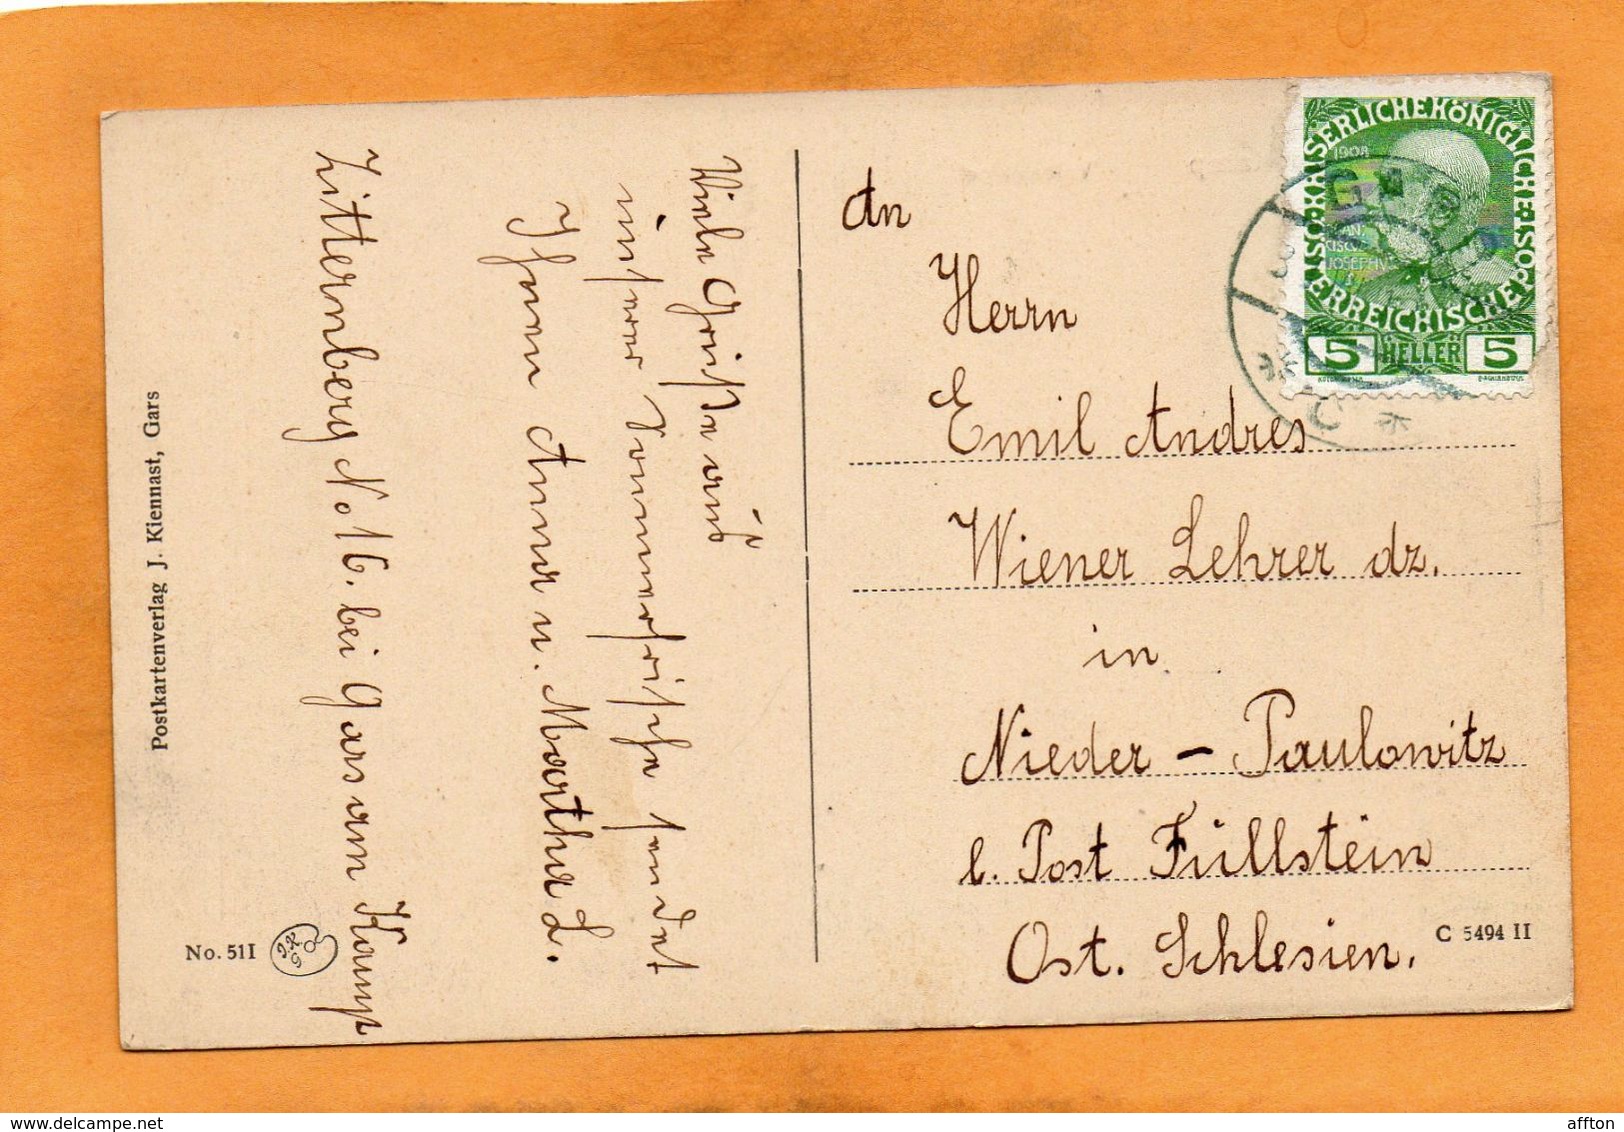 Gars Am Kamp 1913 Postcard - Gars Am Kamp